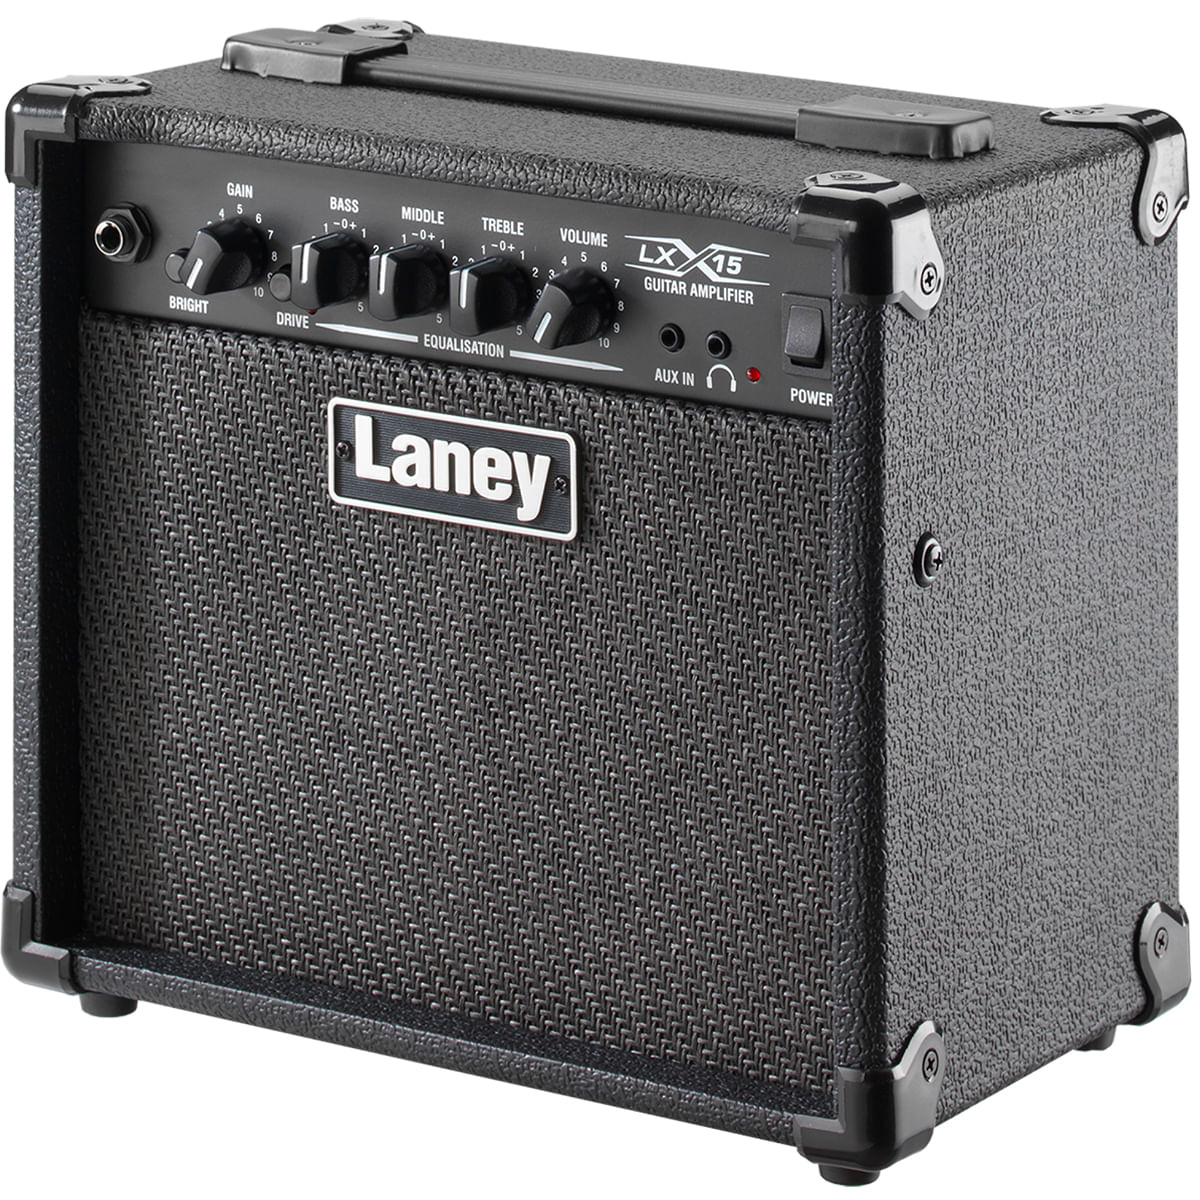 amplificador-combo-de-guitarra-15w-rms-lx-15-laney-2